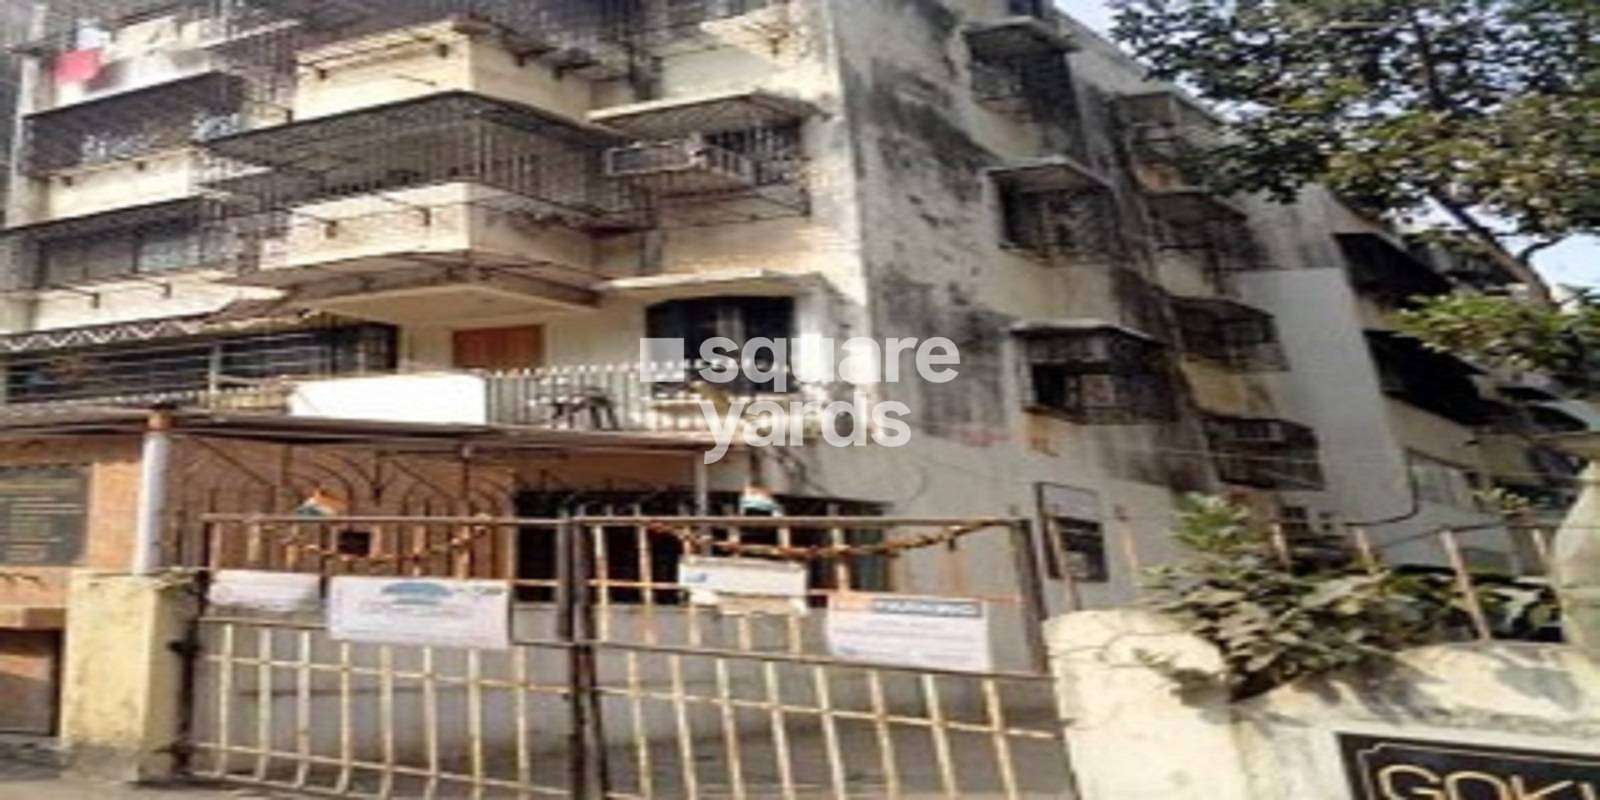 Gokul Apartment Malad Cover Image